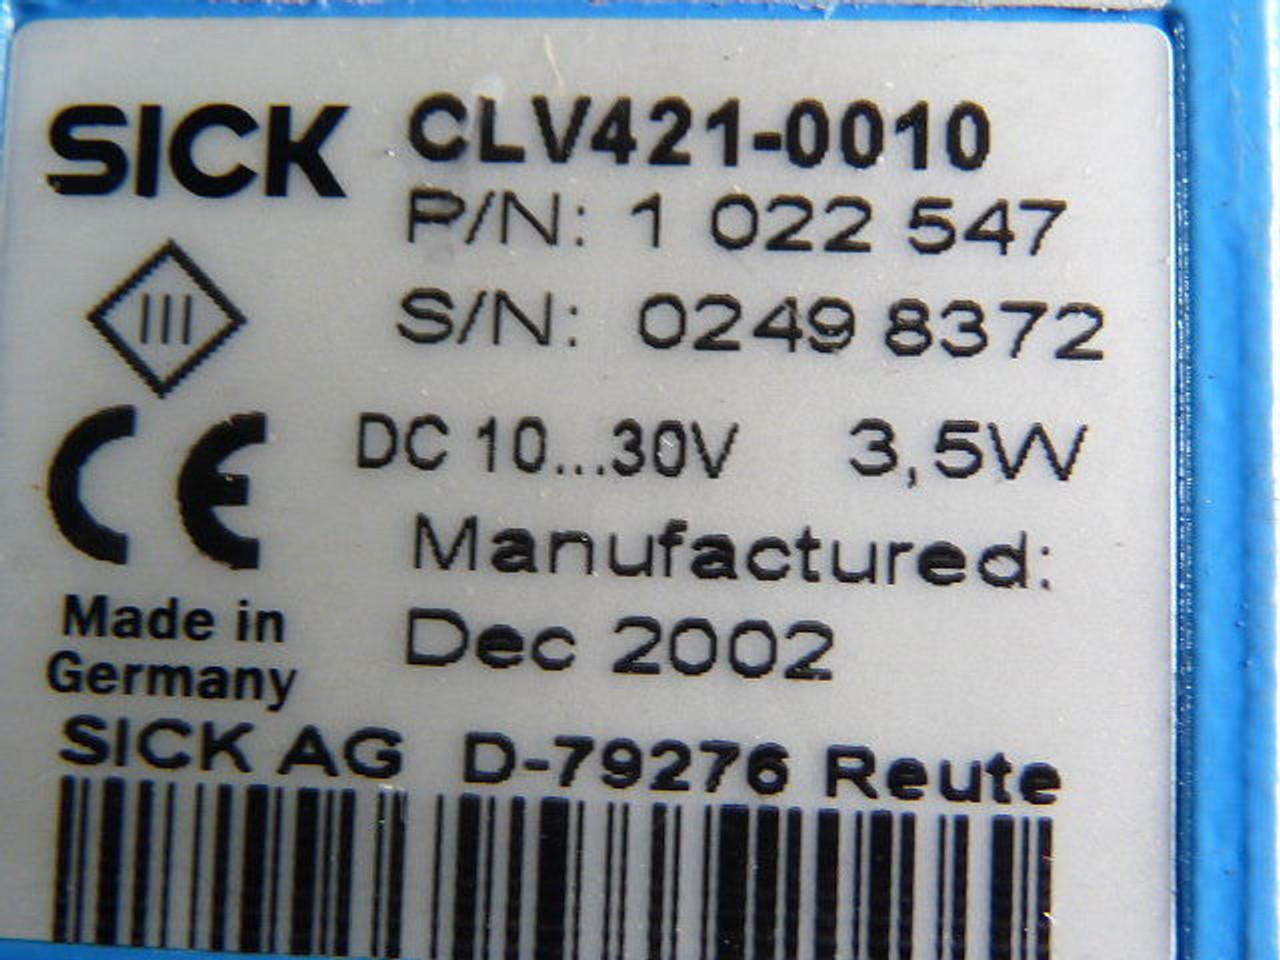 Sick CLV421-0010 1022547 Long Range Barcode Scanner 175-550mm USED